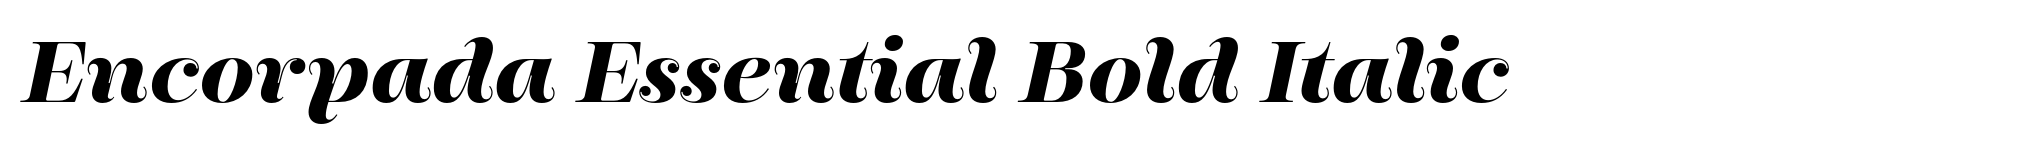 Encorpada Essential Bold Italic image